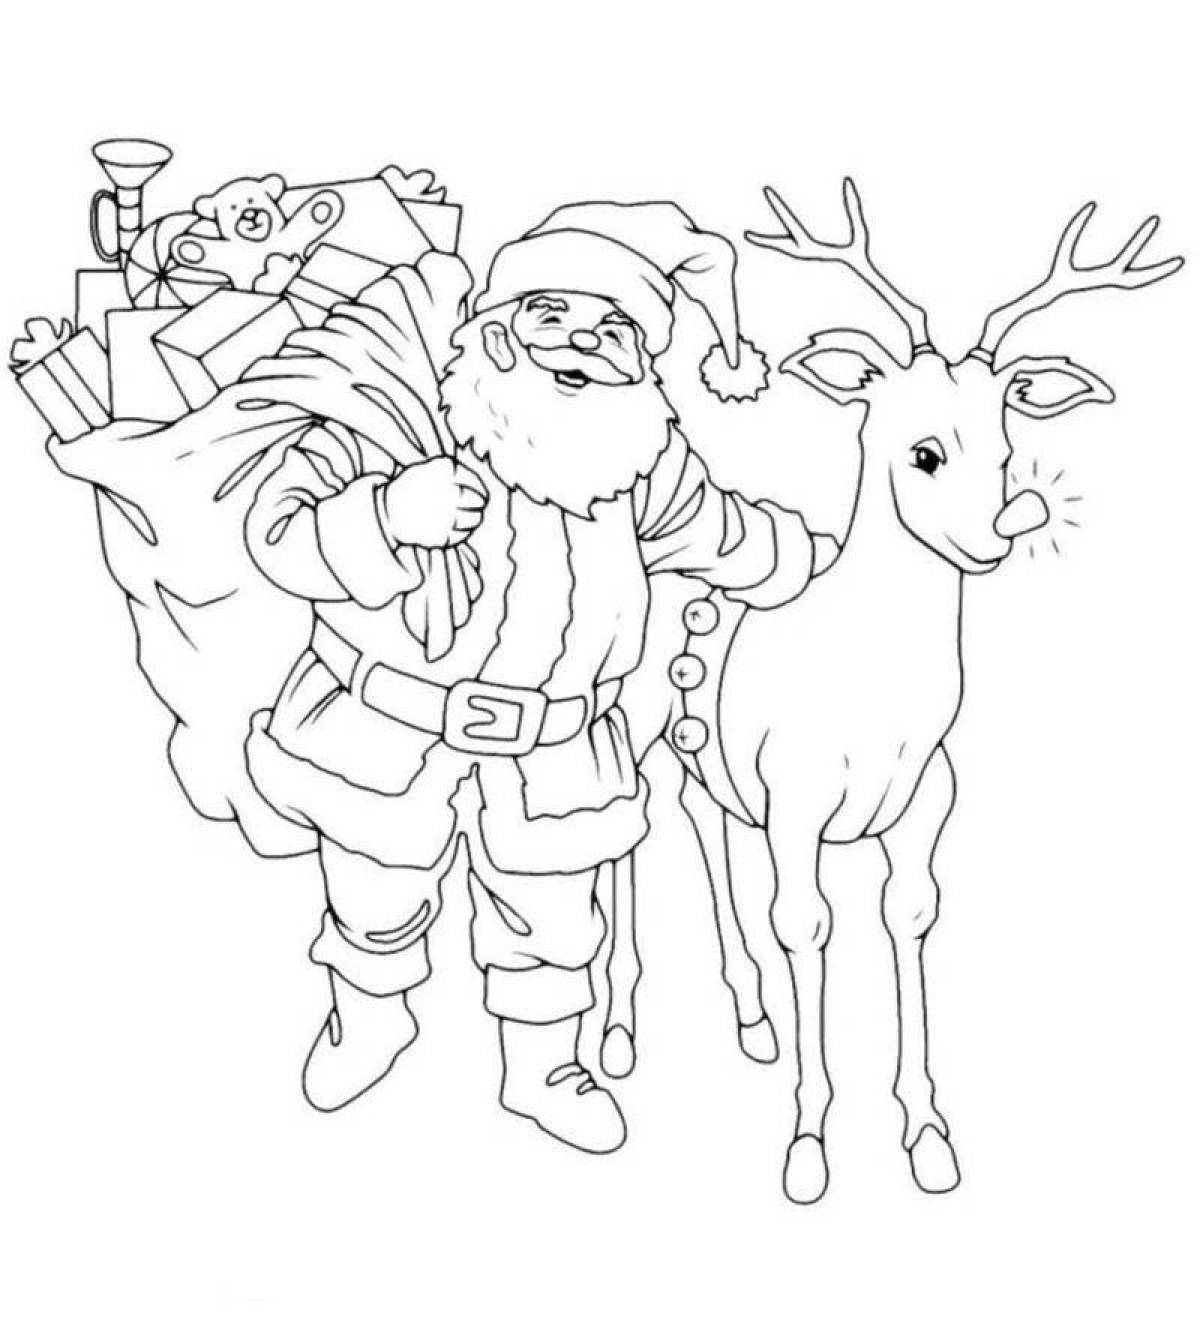 Bright santa claus and reindeer coloring book